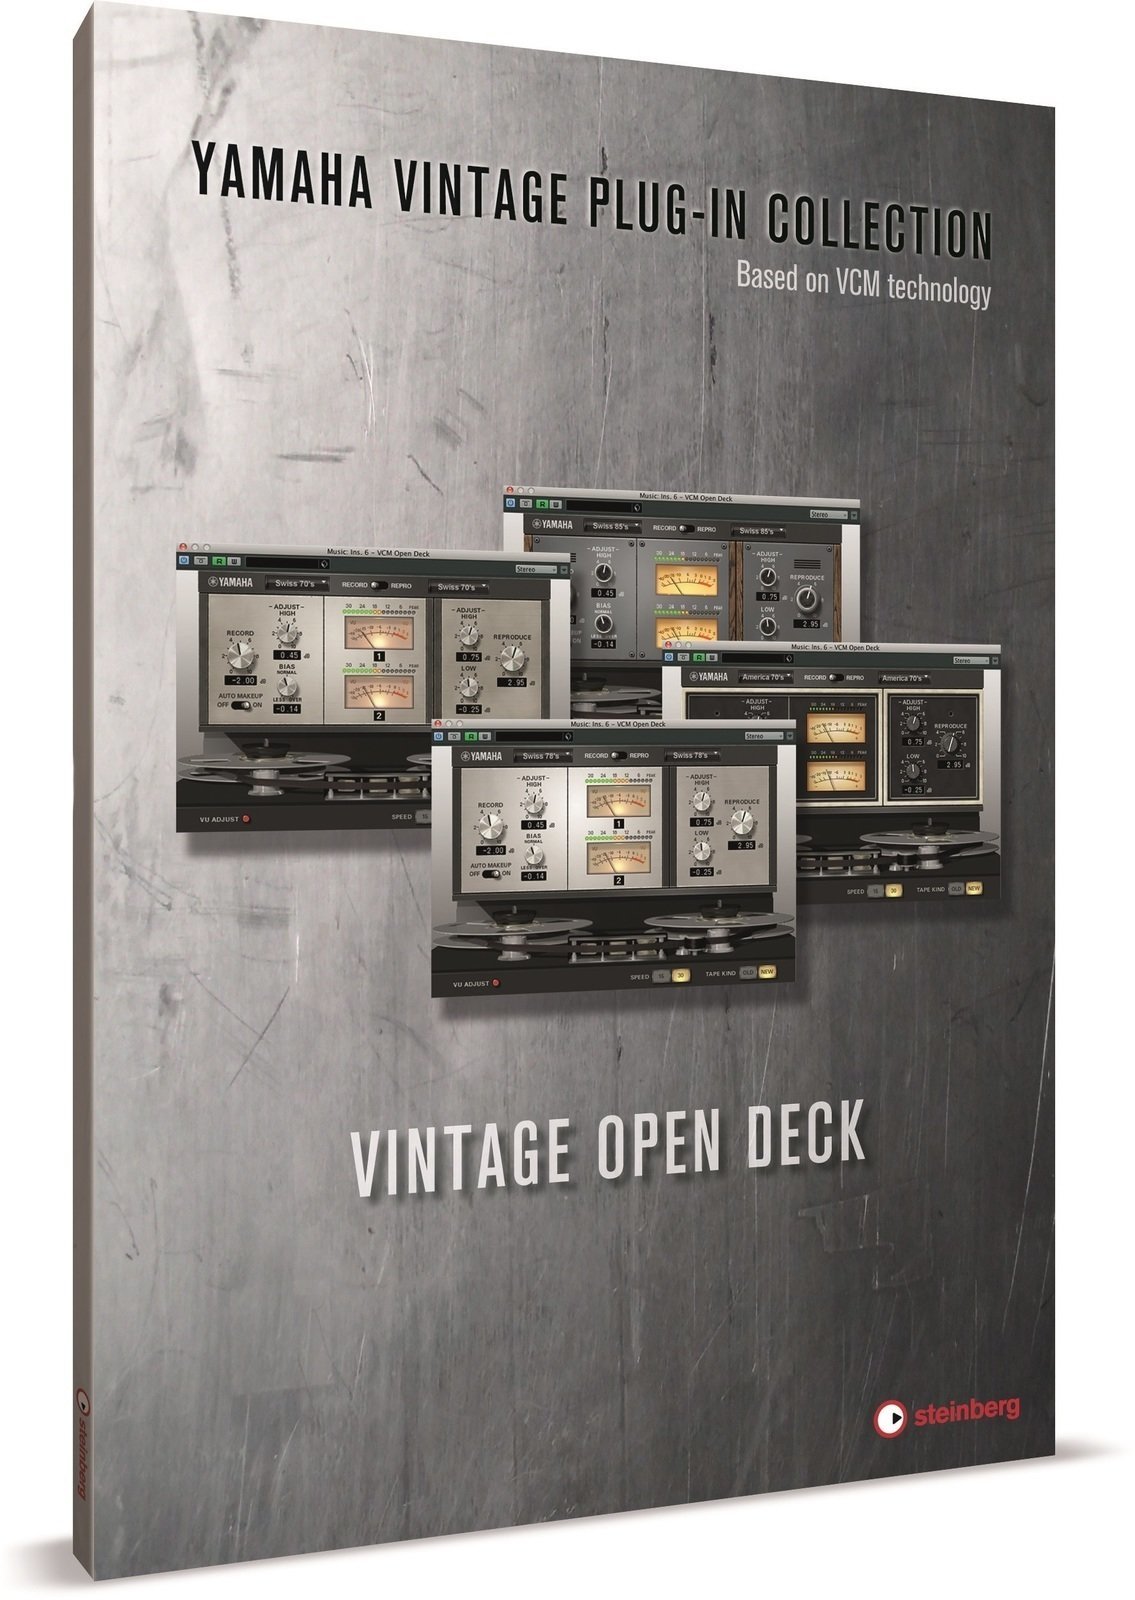 Studio-Software Steinberg Vintage Open Deck